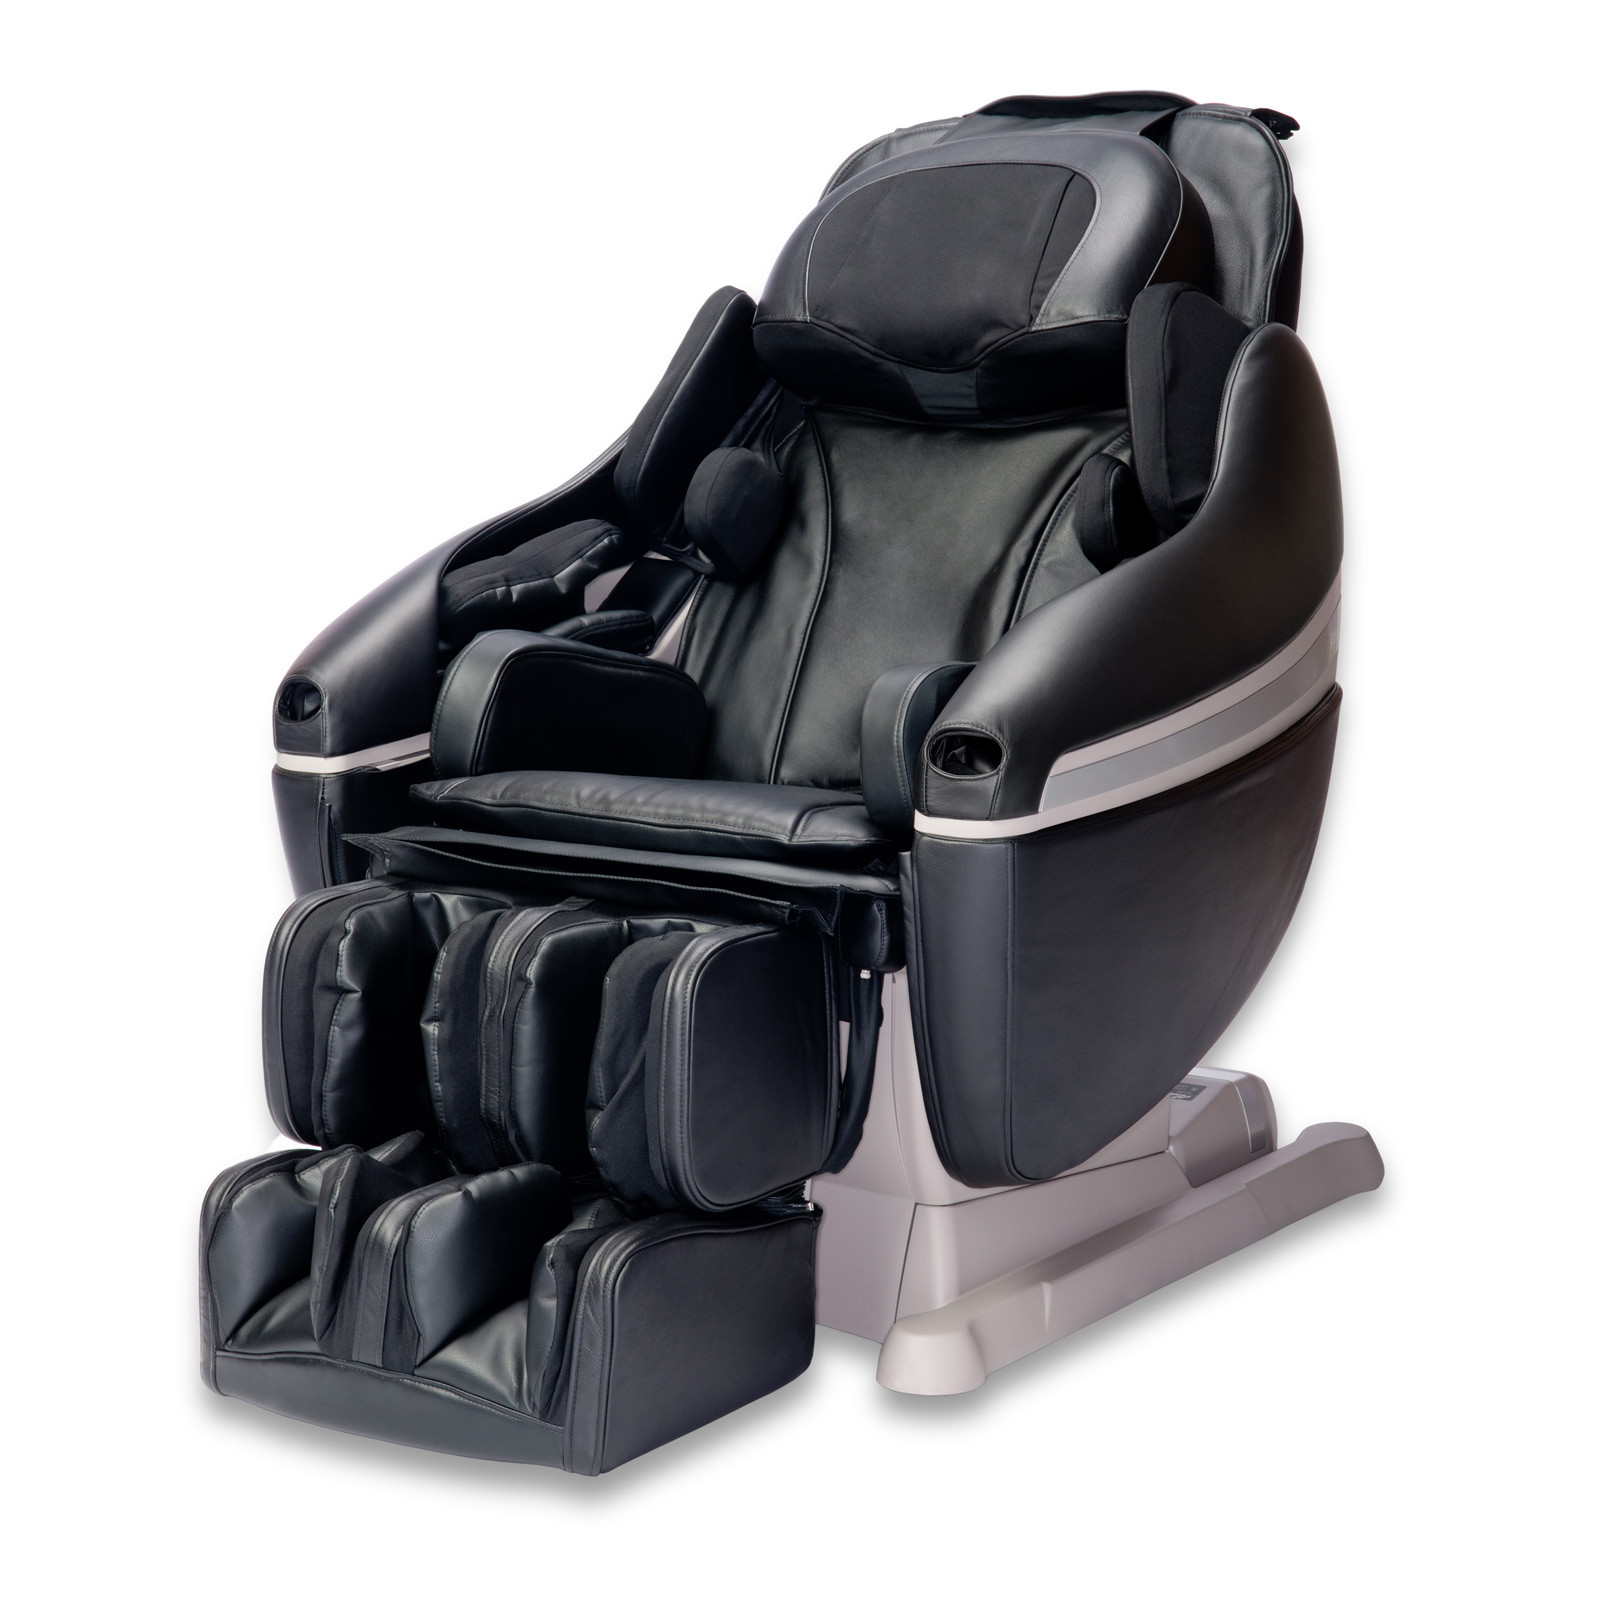 Best ideas about Dreamwave Massage Chair
. Save or Pin Inada HCP A Sogno DreamWave Massage Chair Black Now.